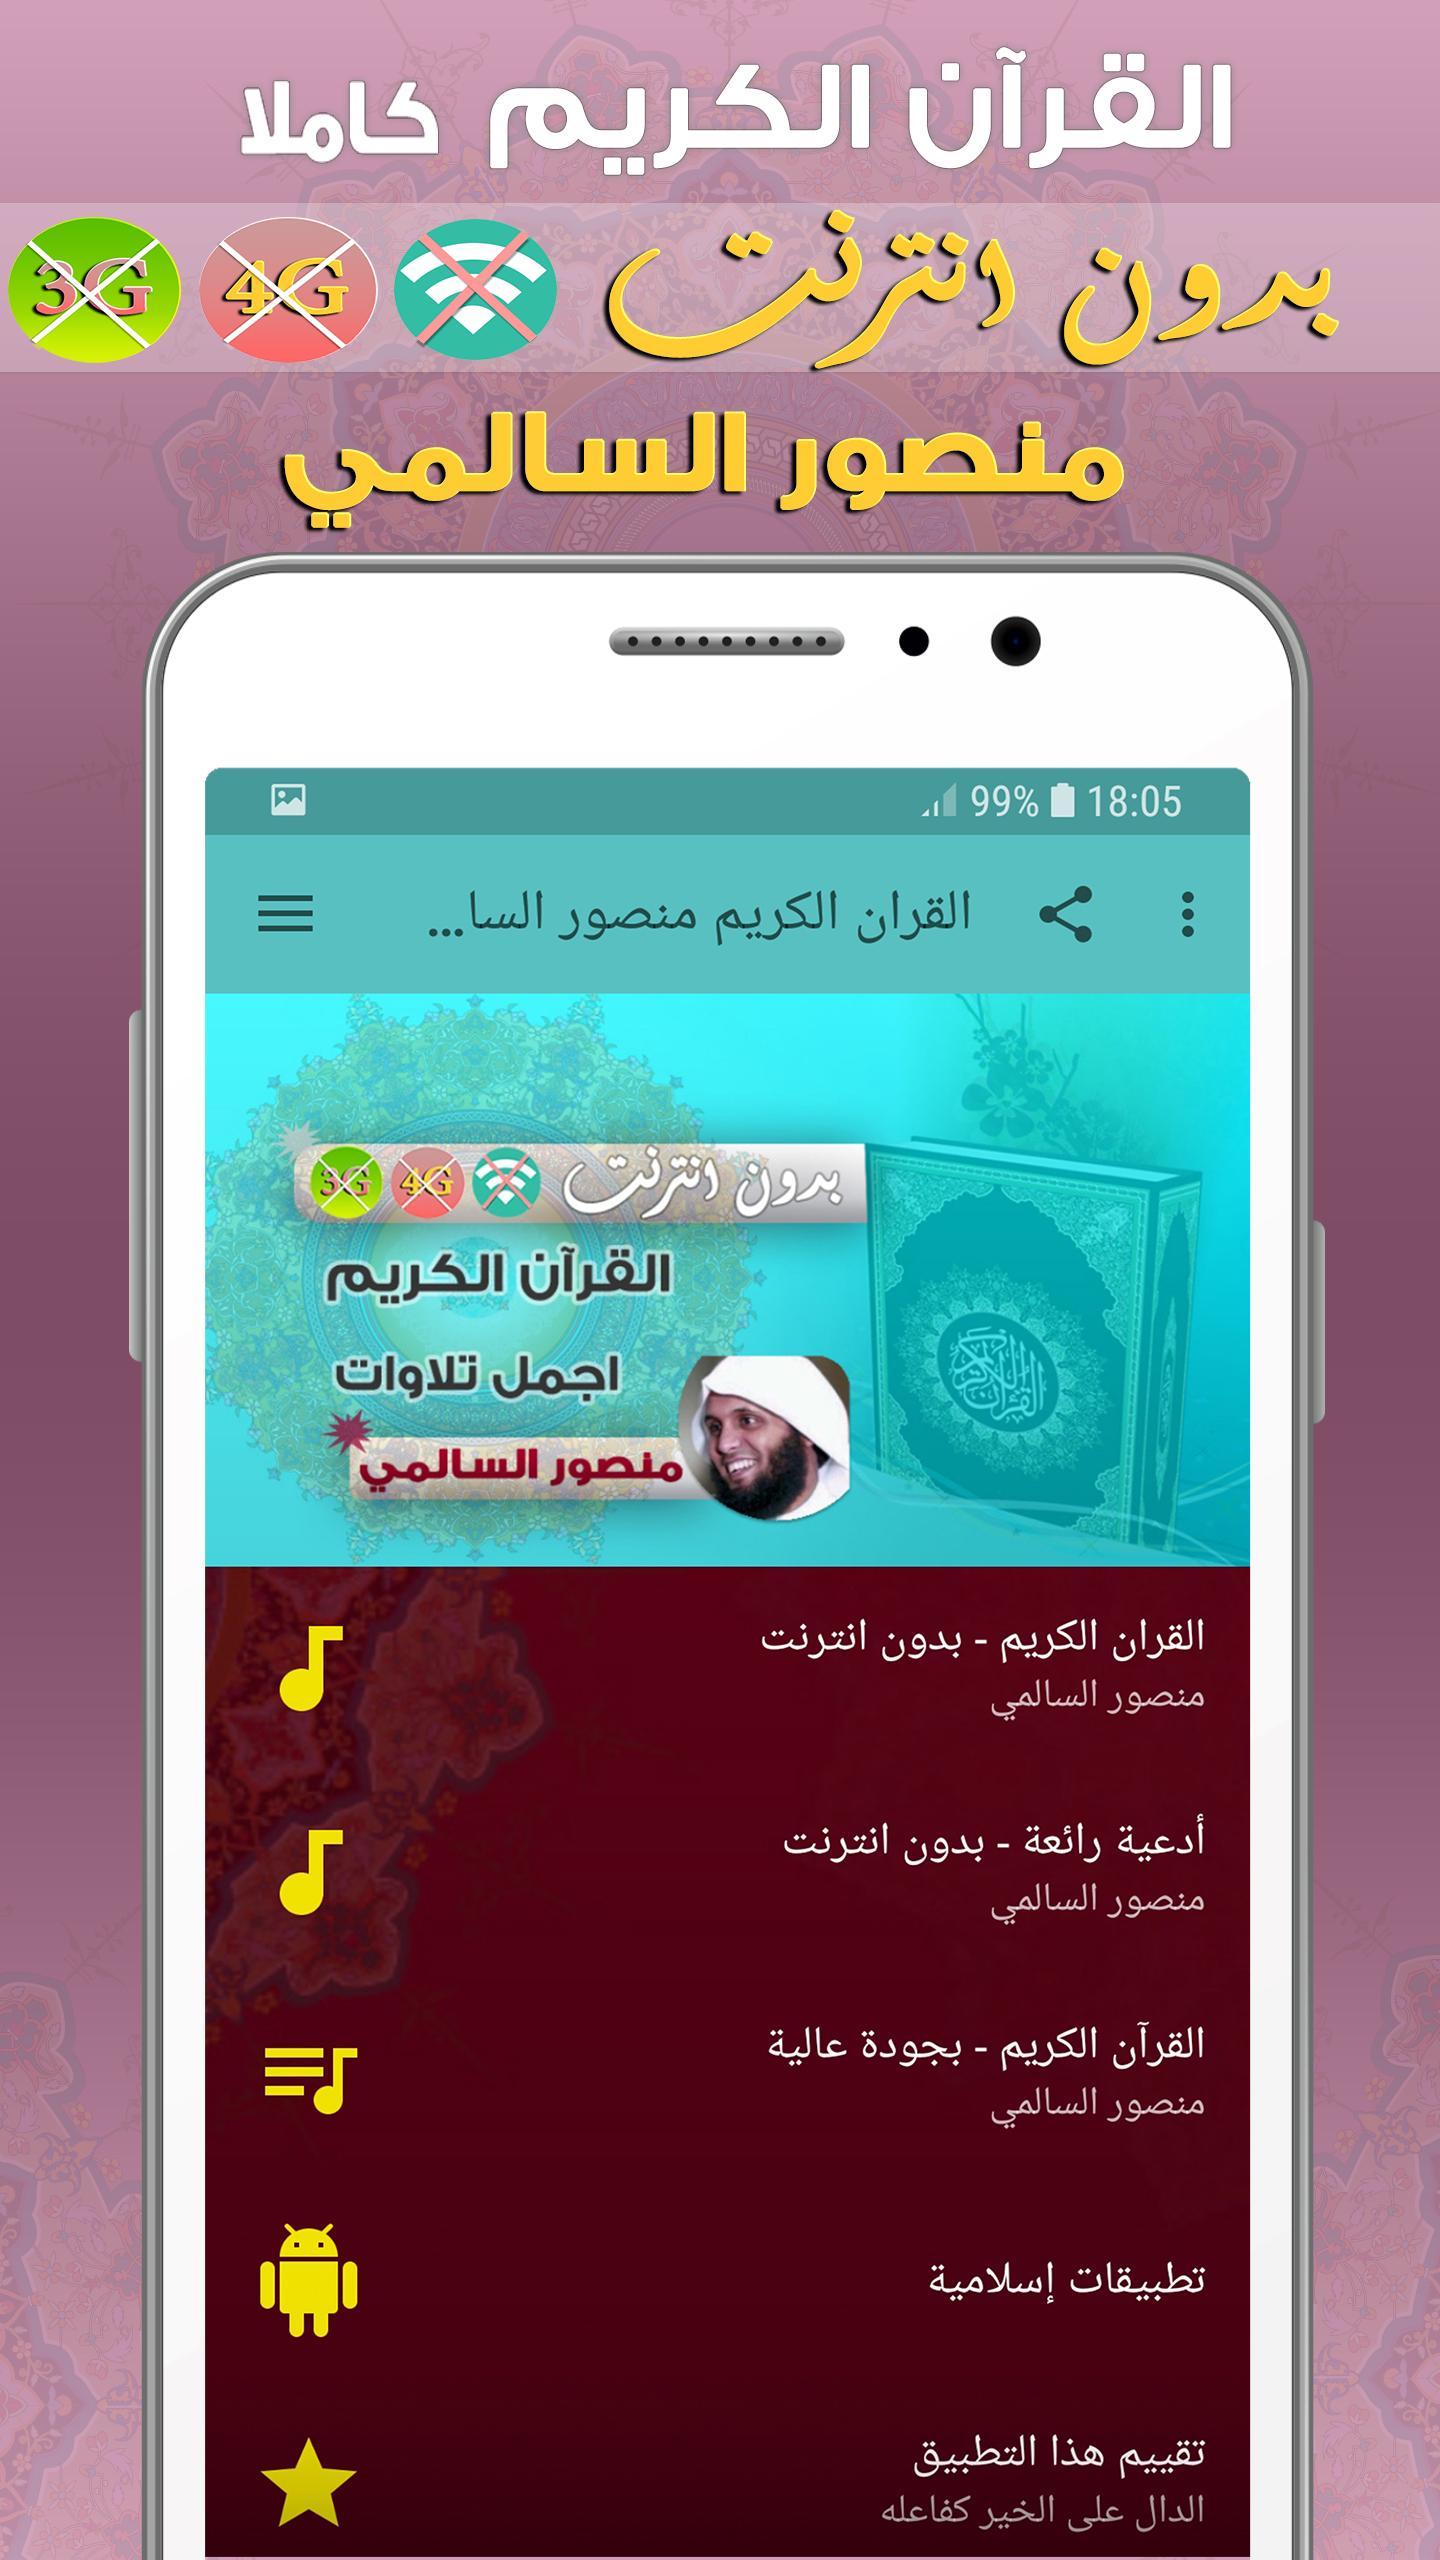 Mansur Al Salimi Mp3 Quran Offline APK for Android Download